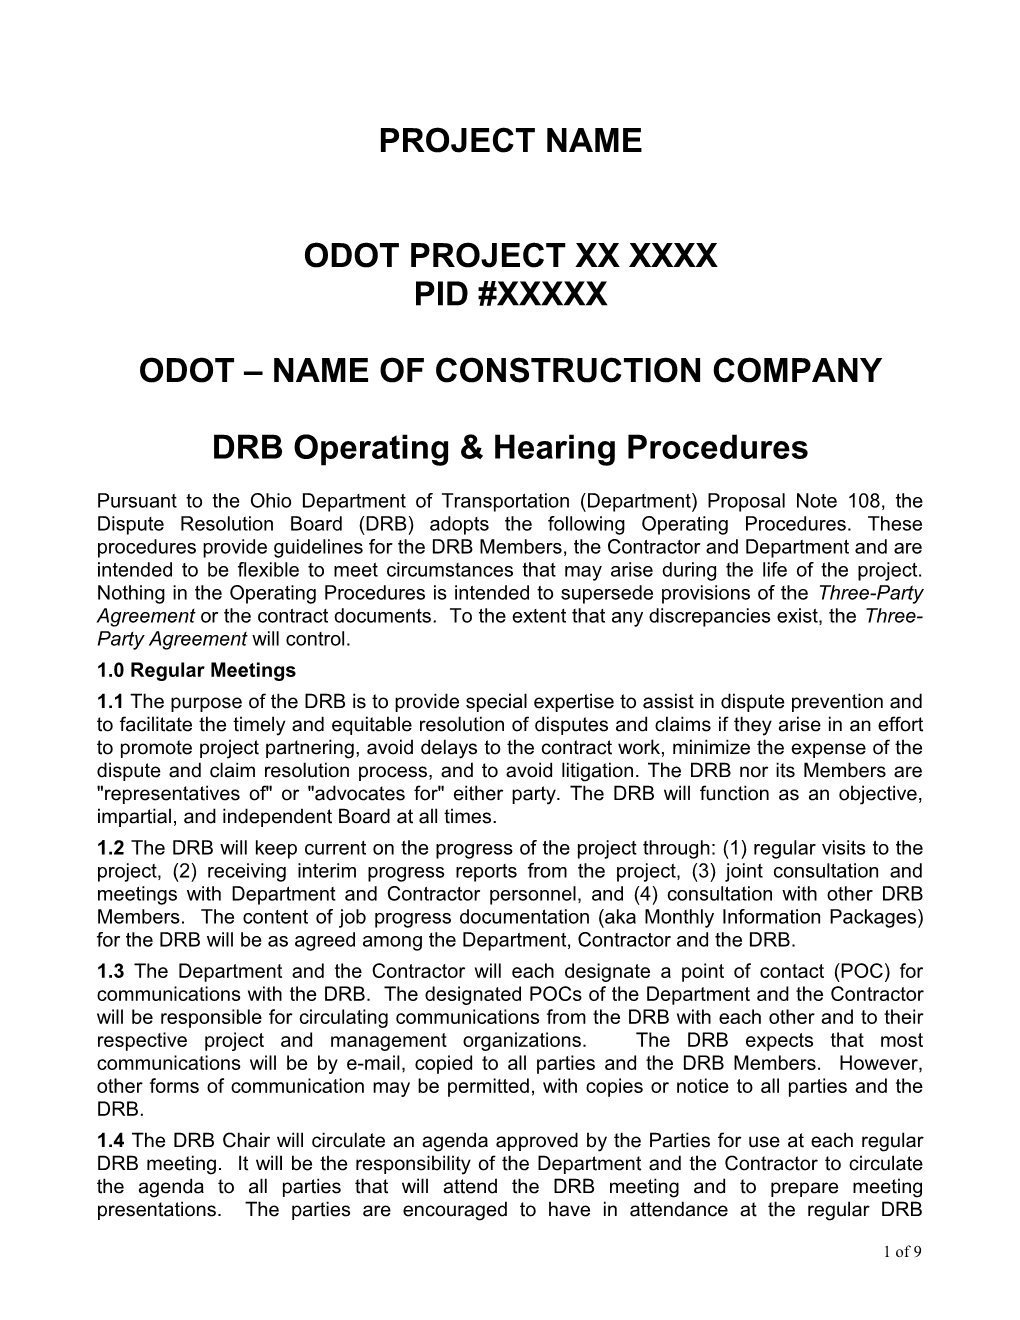 Odot Name of Construction Company